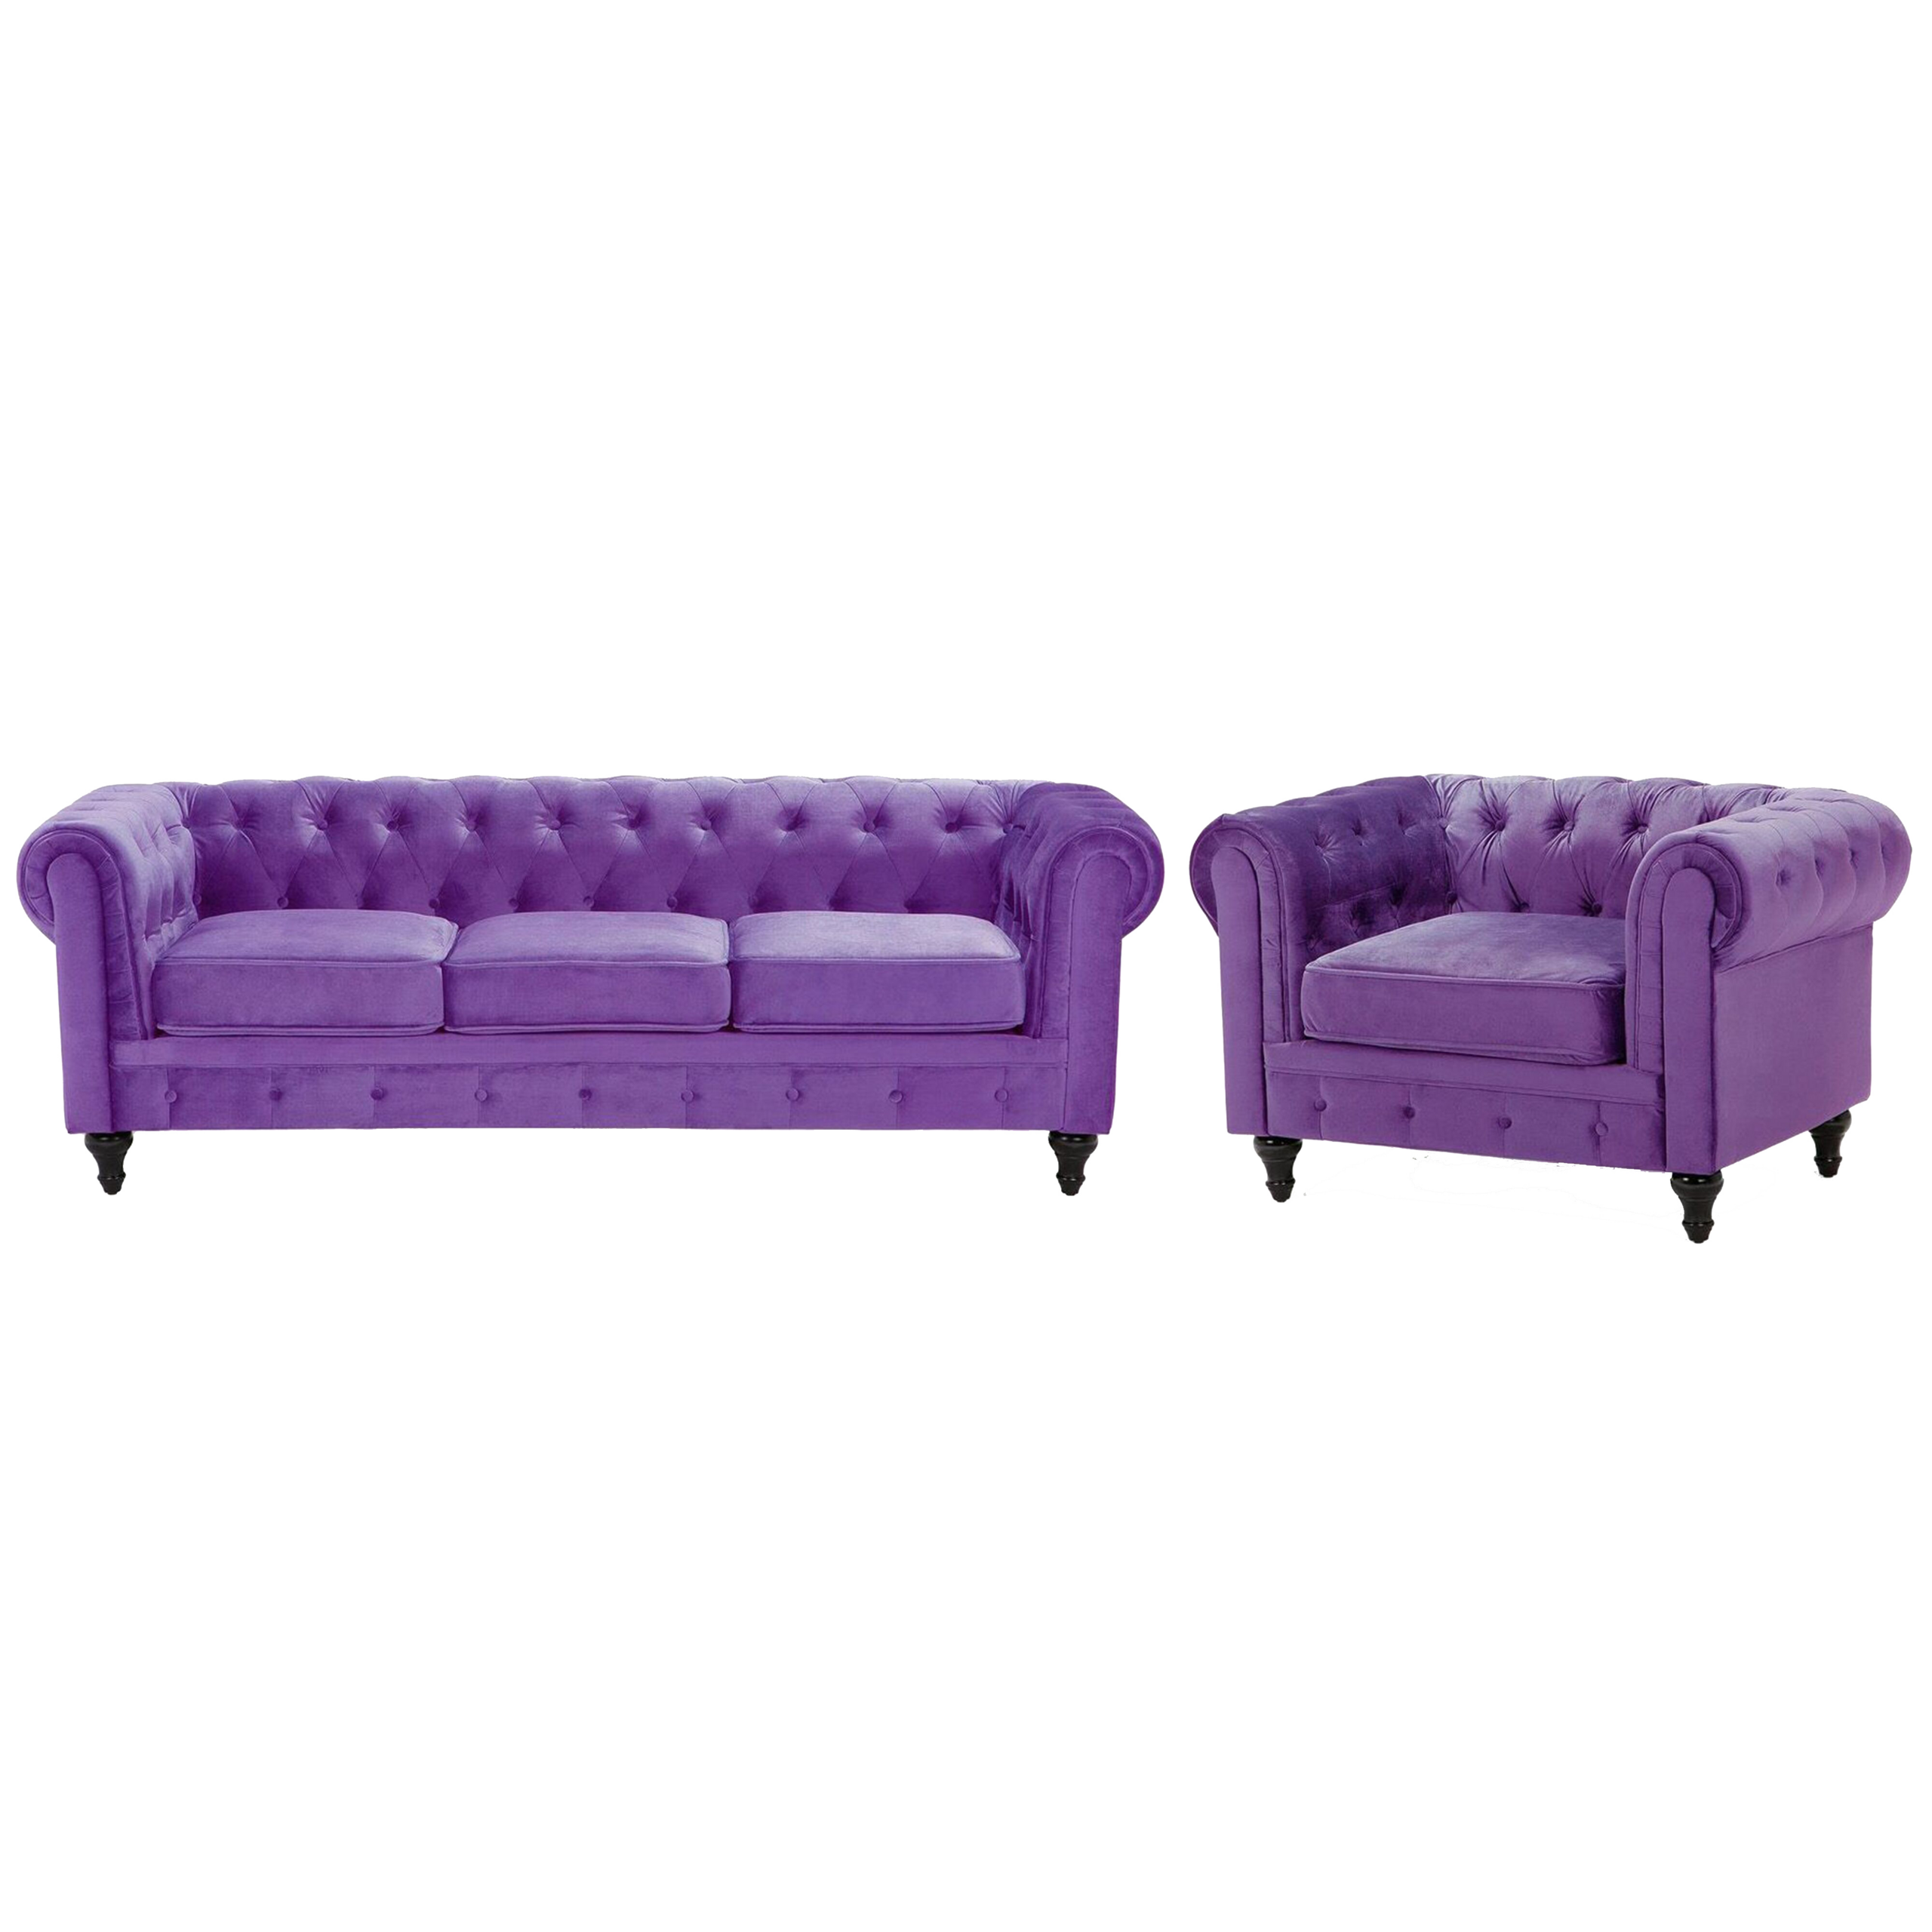 Beliani Chesterfield Living Room Set Purple Velvet Fabric Upholstery Dark Wood Legs 3 Seater Sofa + Armchair Contemporary